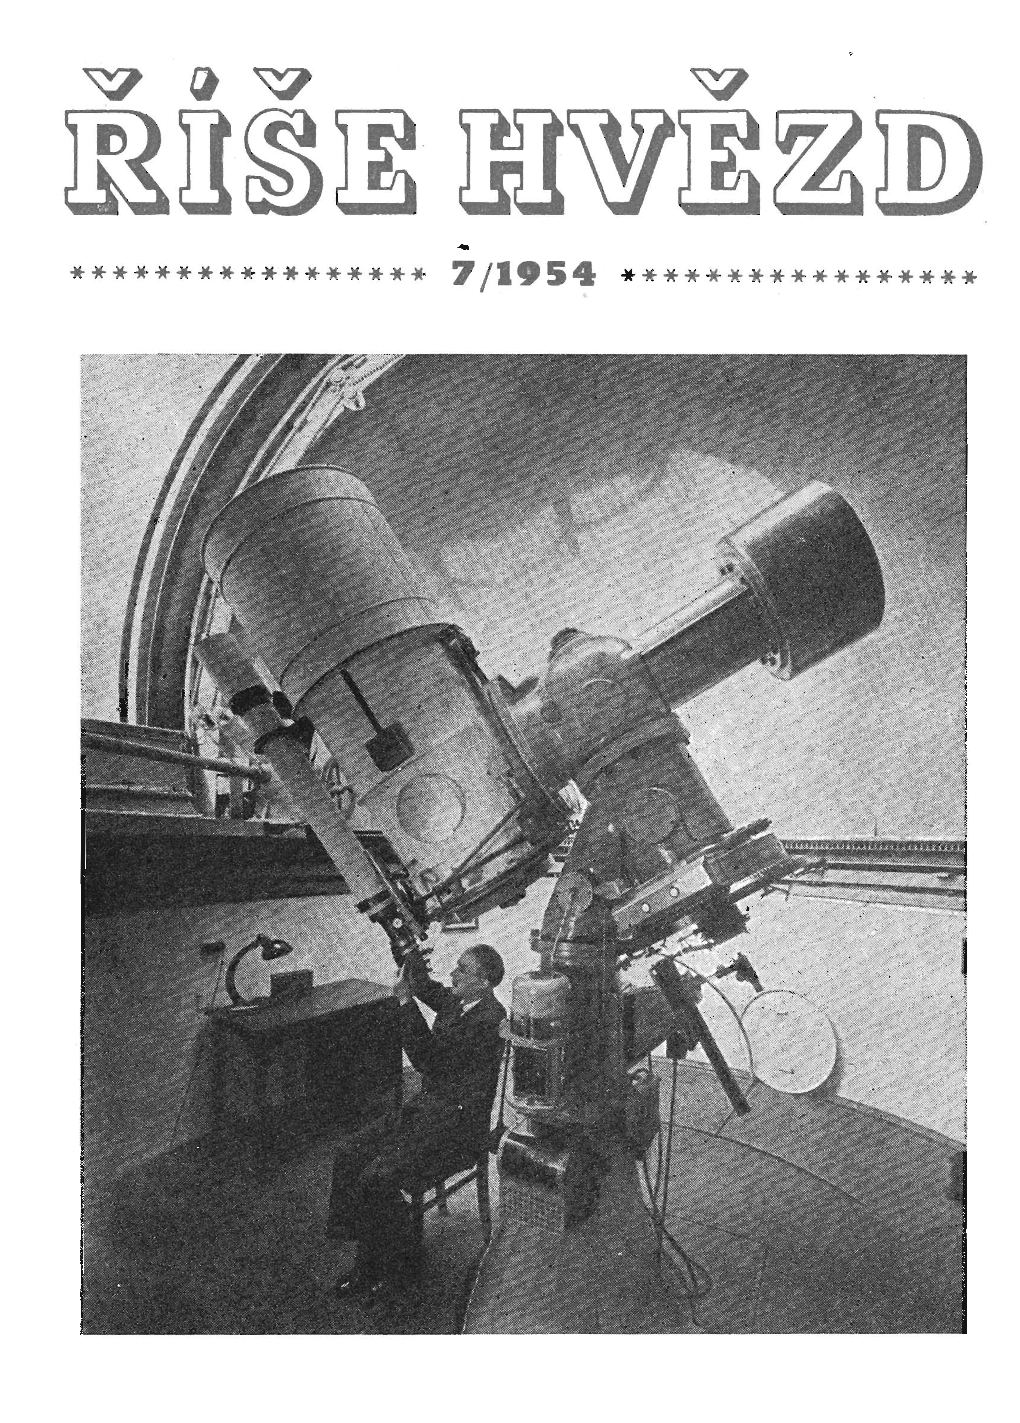 7/1954 ***************** OBSAH Co Nového V Astronomii - Dr B